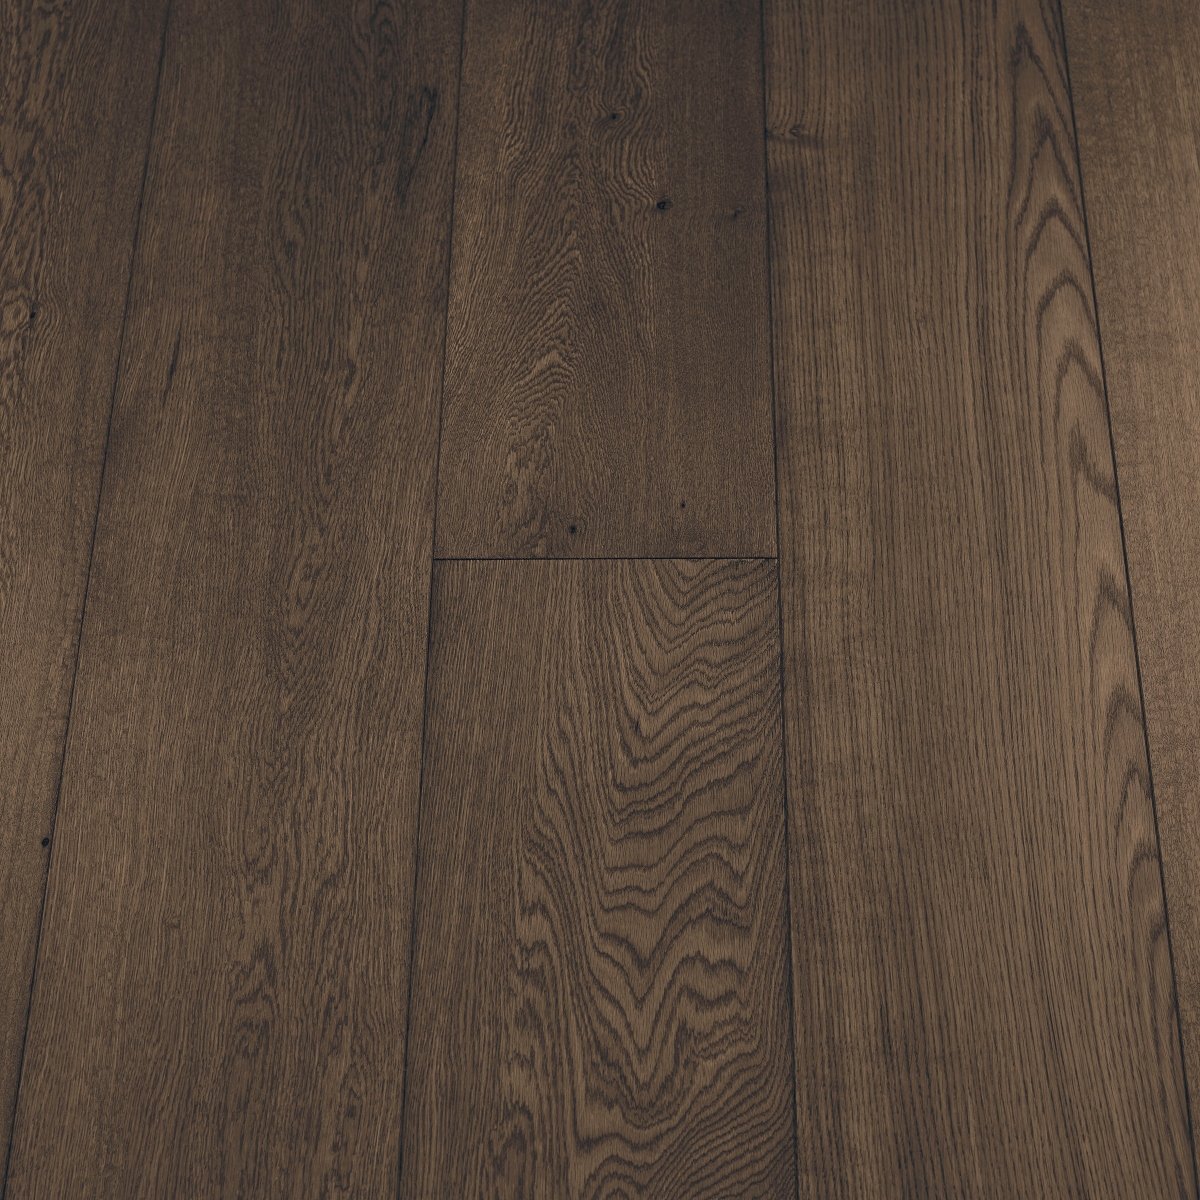 Black Olive 190mm x 18mm x 1900mm Bespoke Wood Flooring